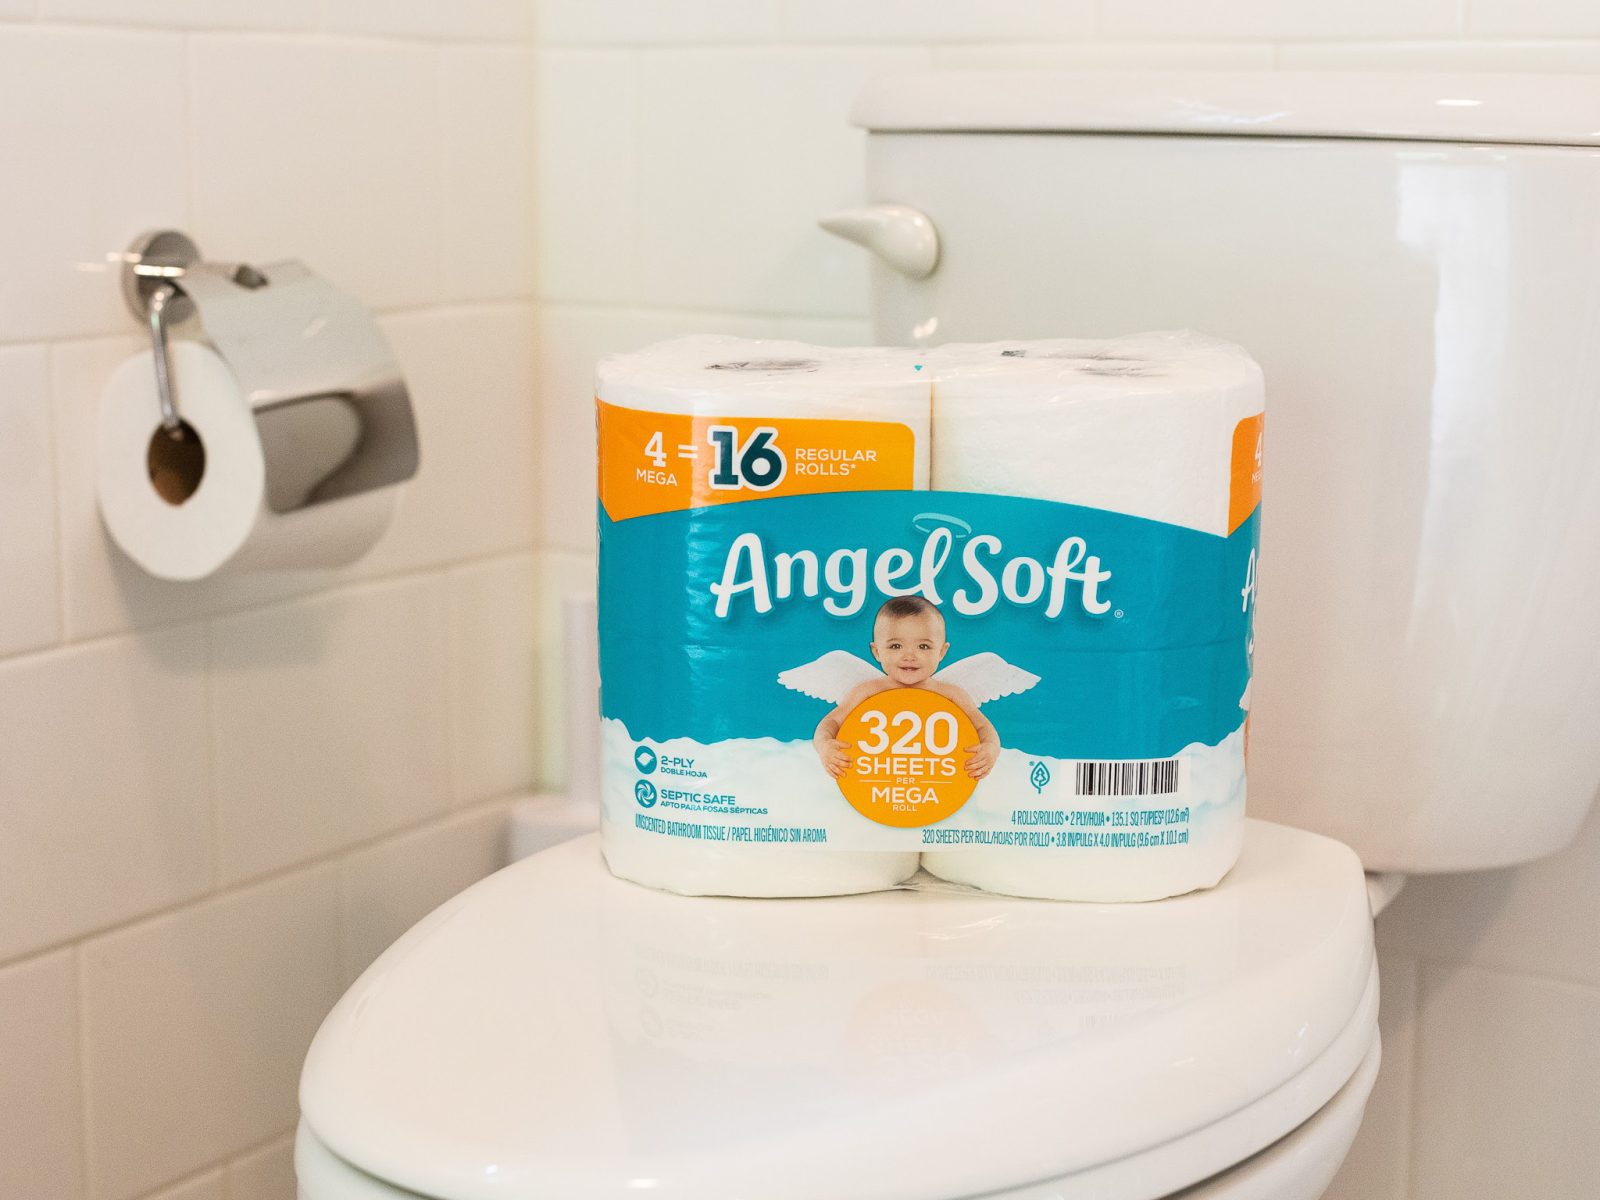 Angel Soft Bath Tissue As Low As $2.49 At Kroger (Regular Price $4.79)